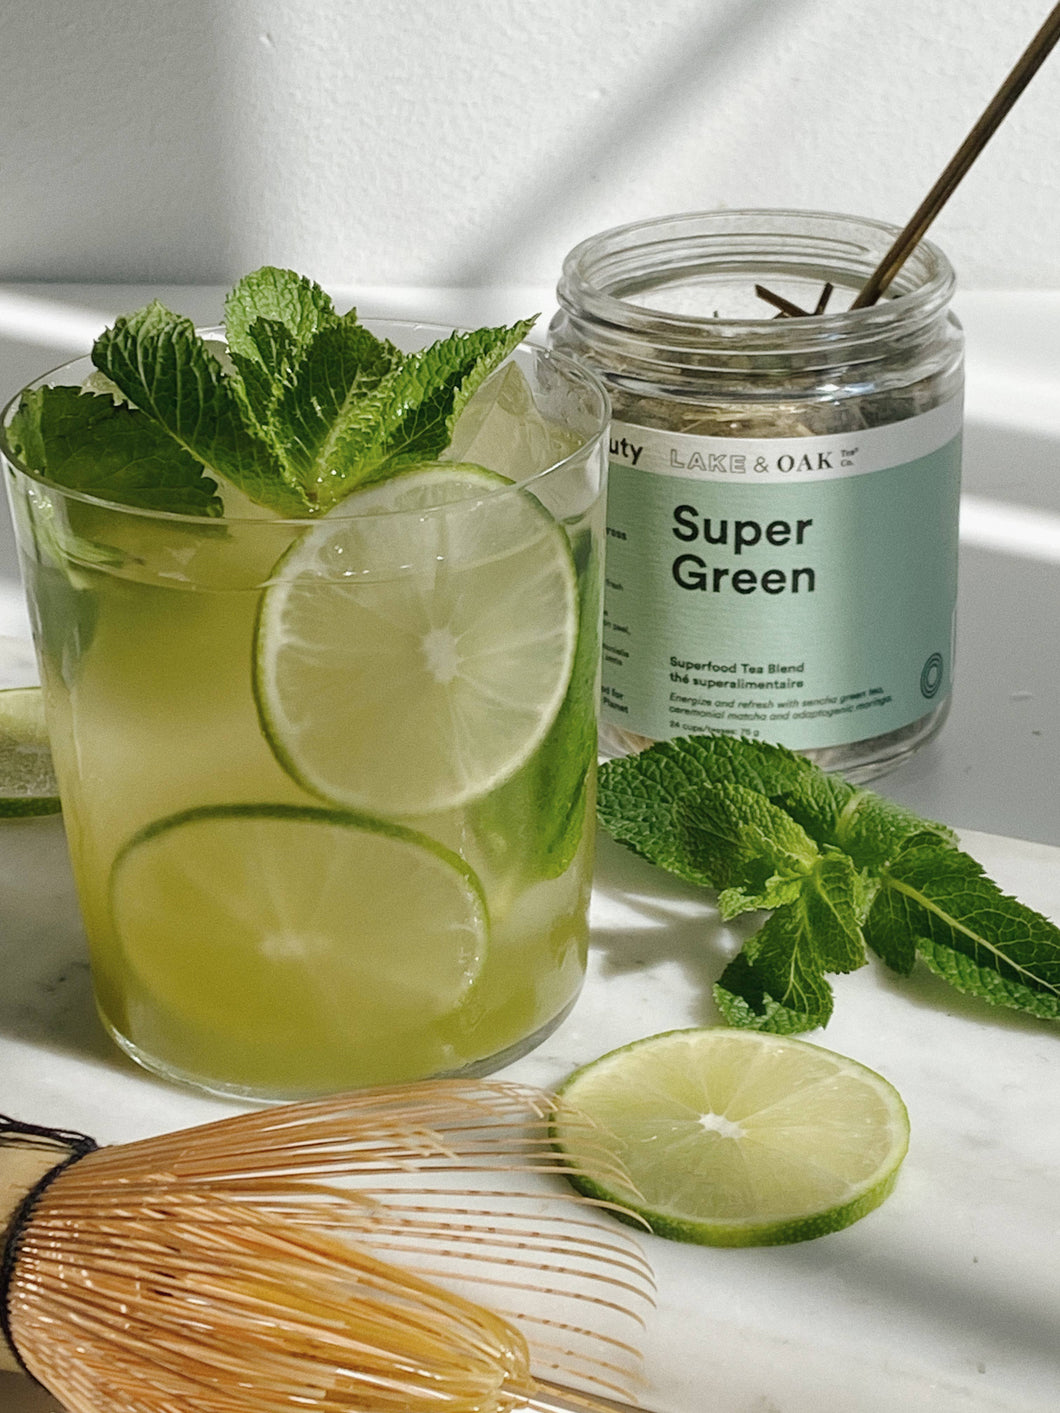 Super Green - Superfood Tea